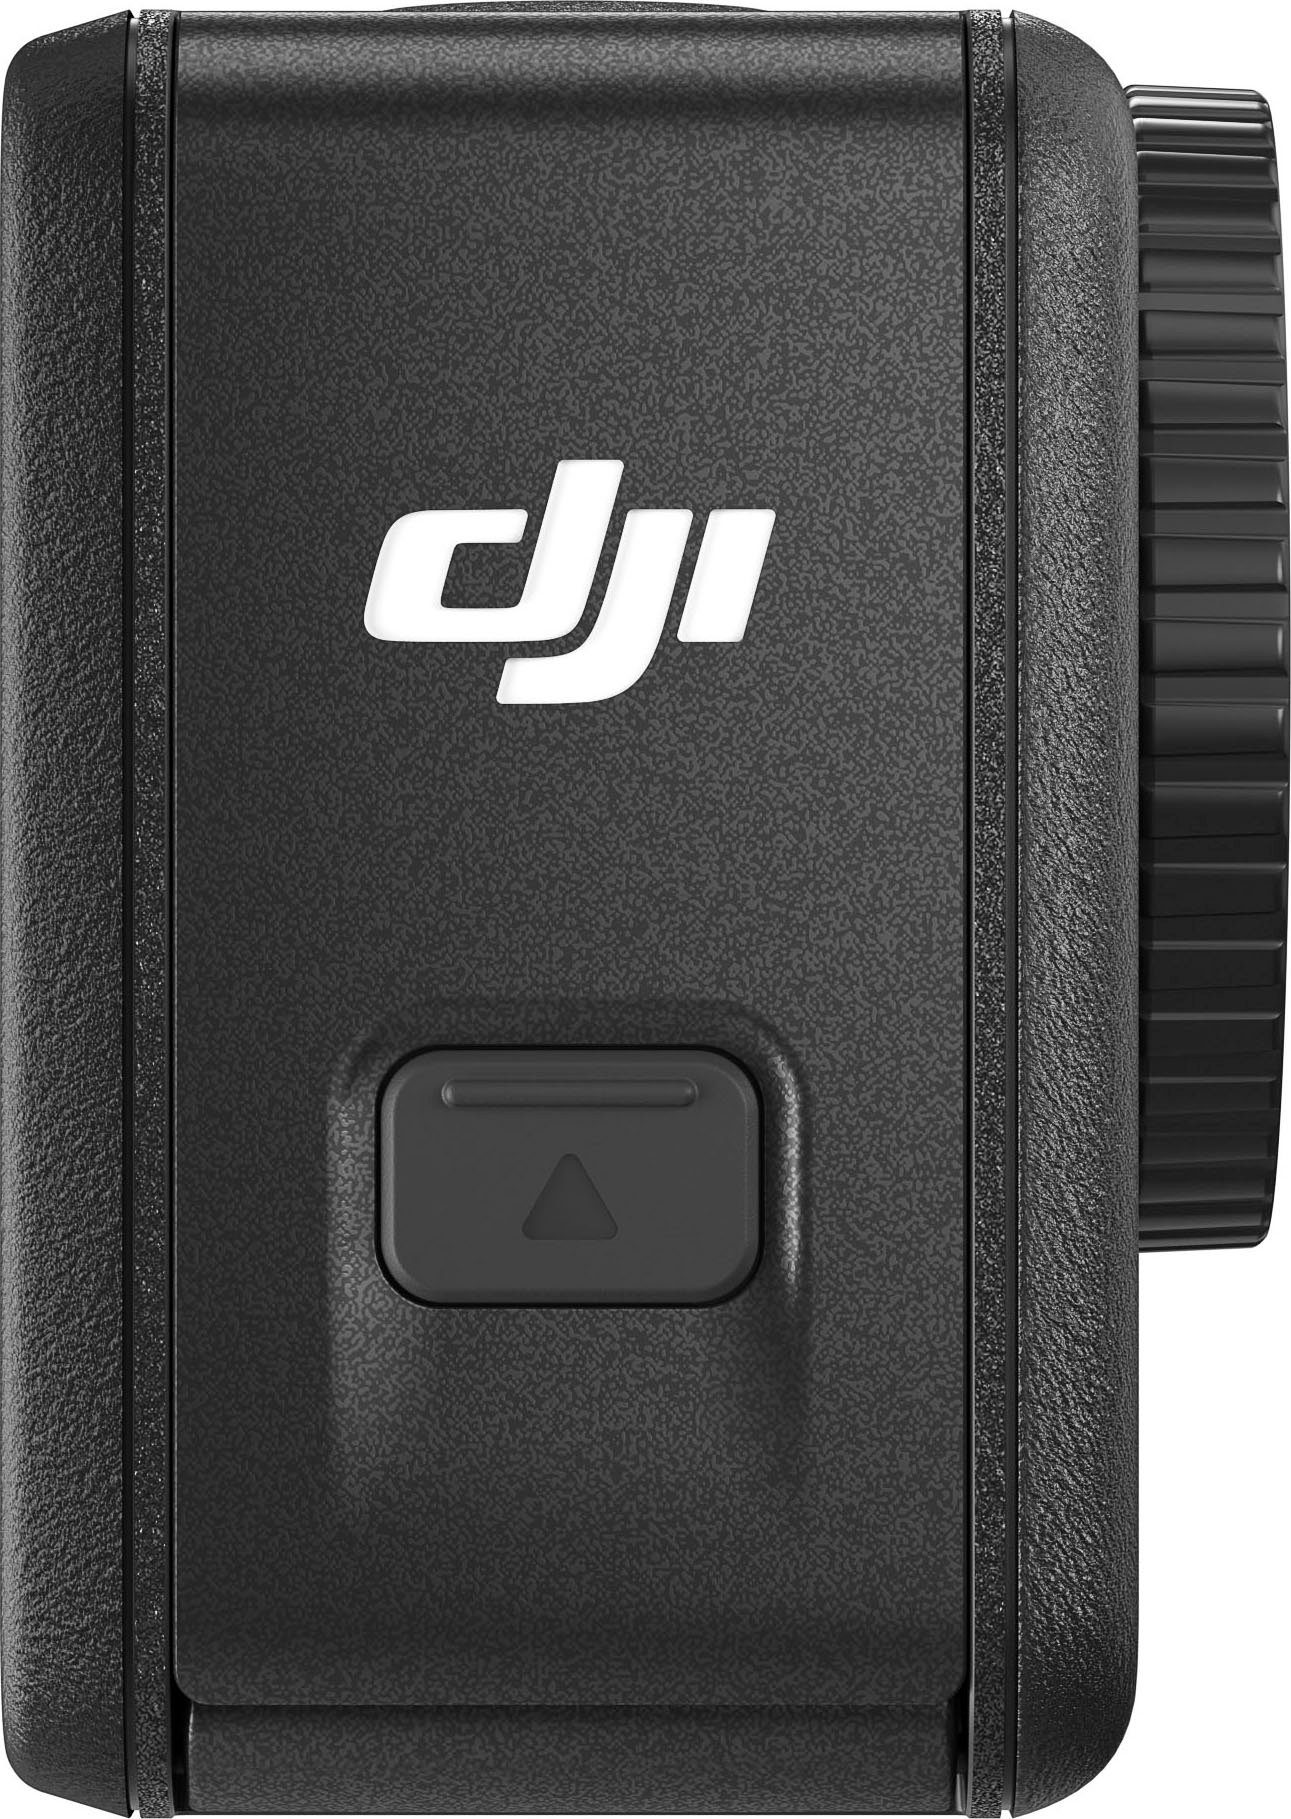 Standard Osmo Action Ultra 4 DJI Bluetooth, Combo WLAN HD, Camcorder (4K (Wi-Fi)